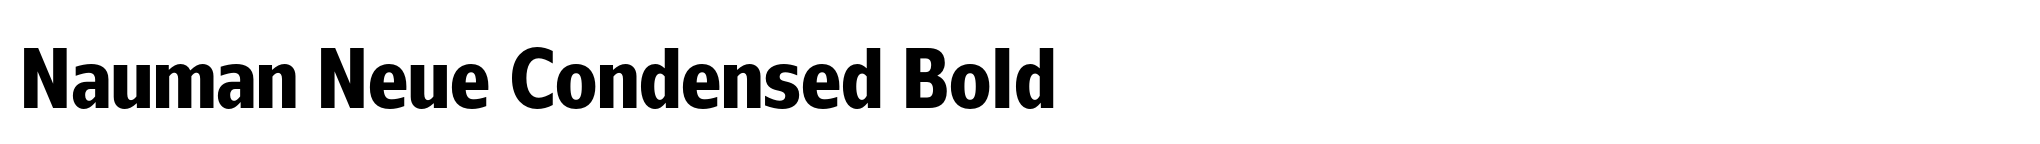 Nauman Neue Condensed Bold image